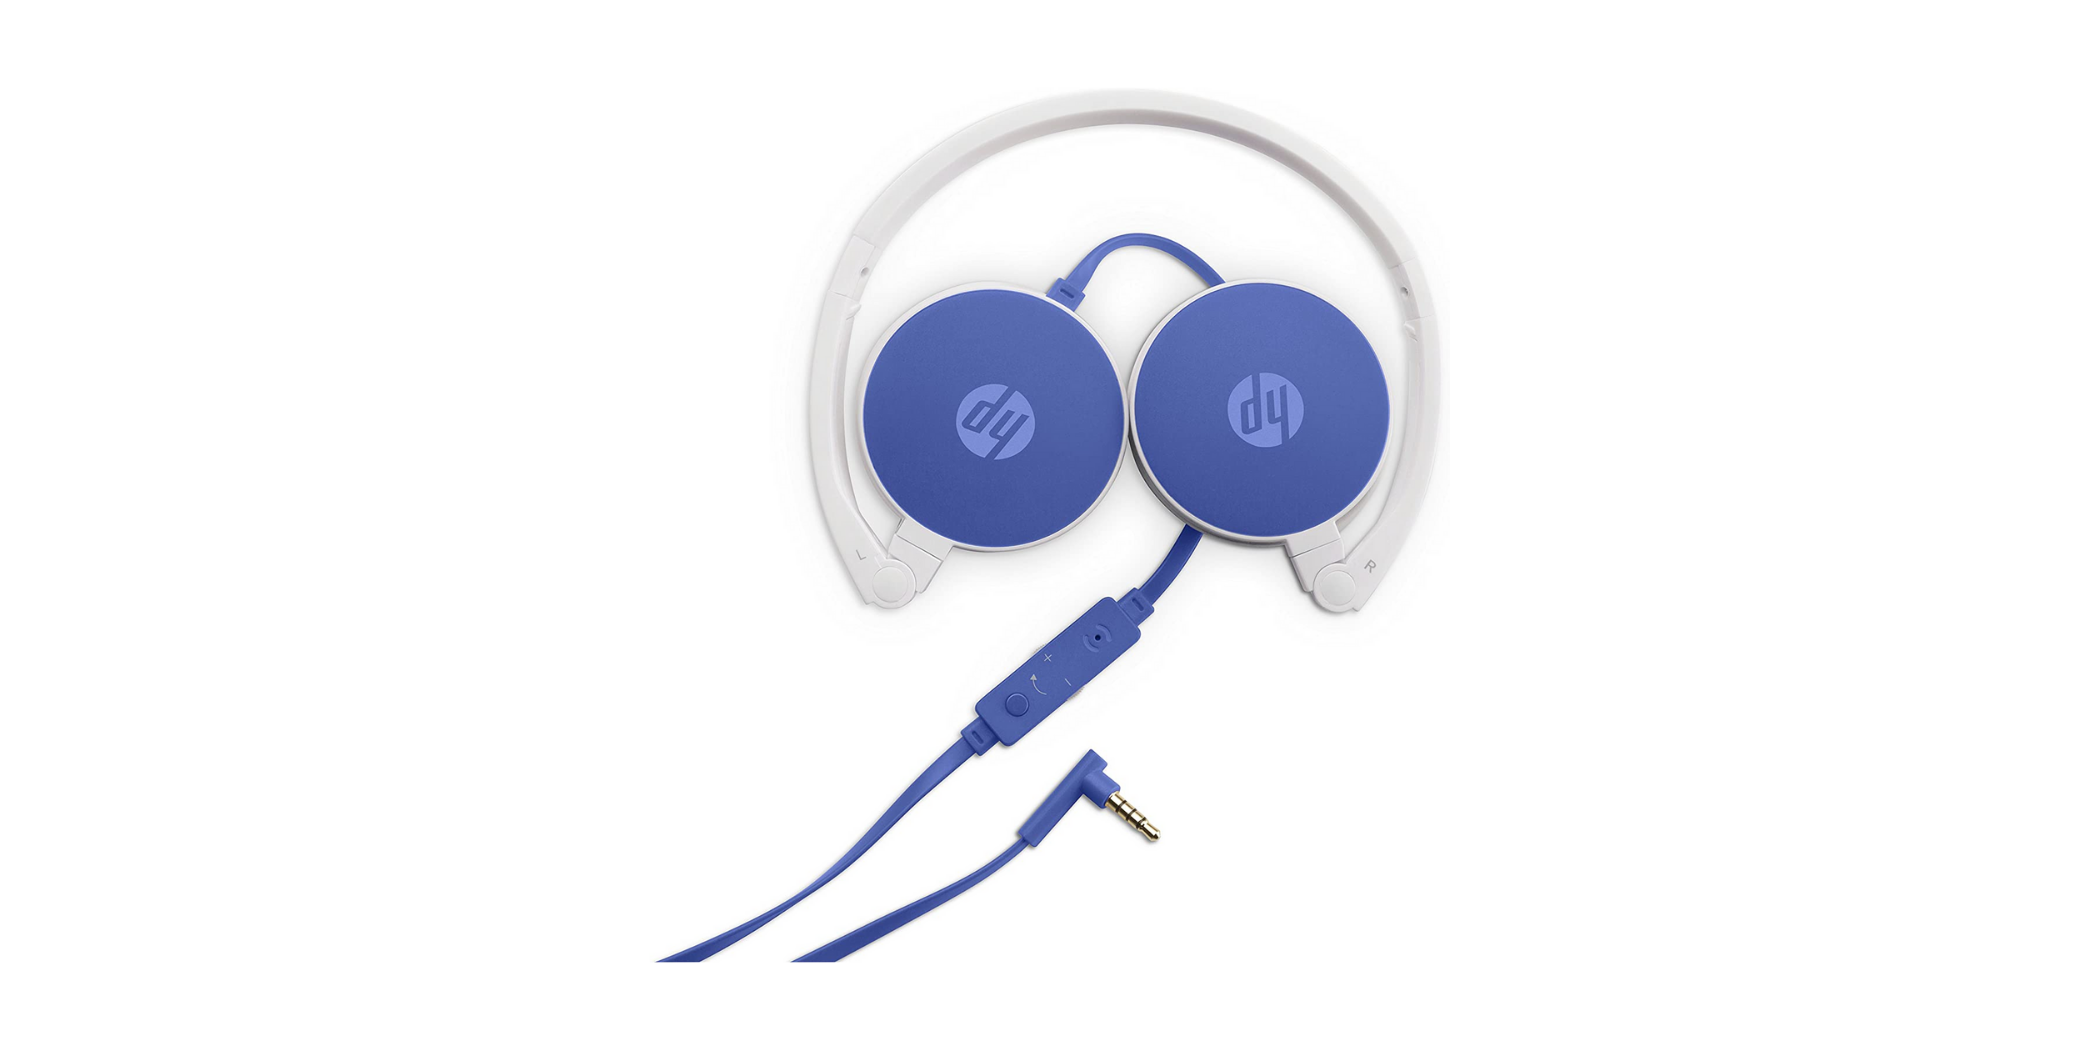 HP Headphone H2800 DF Blue